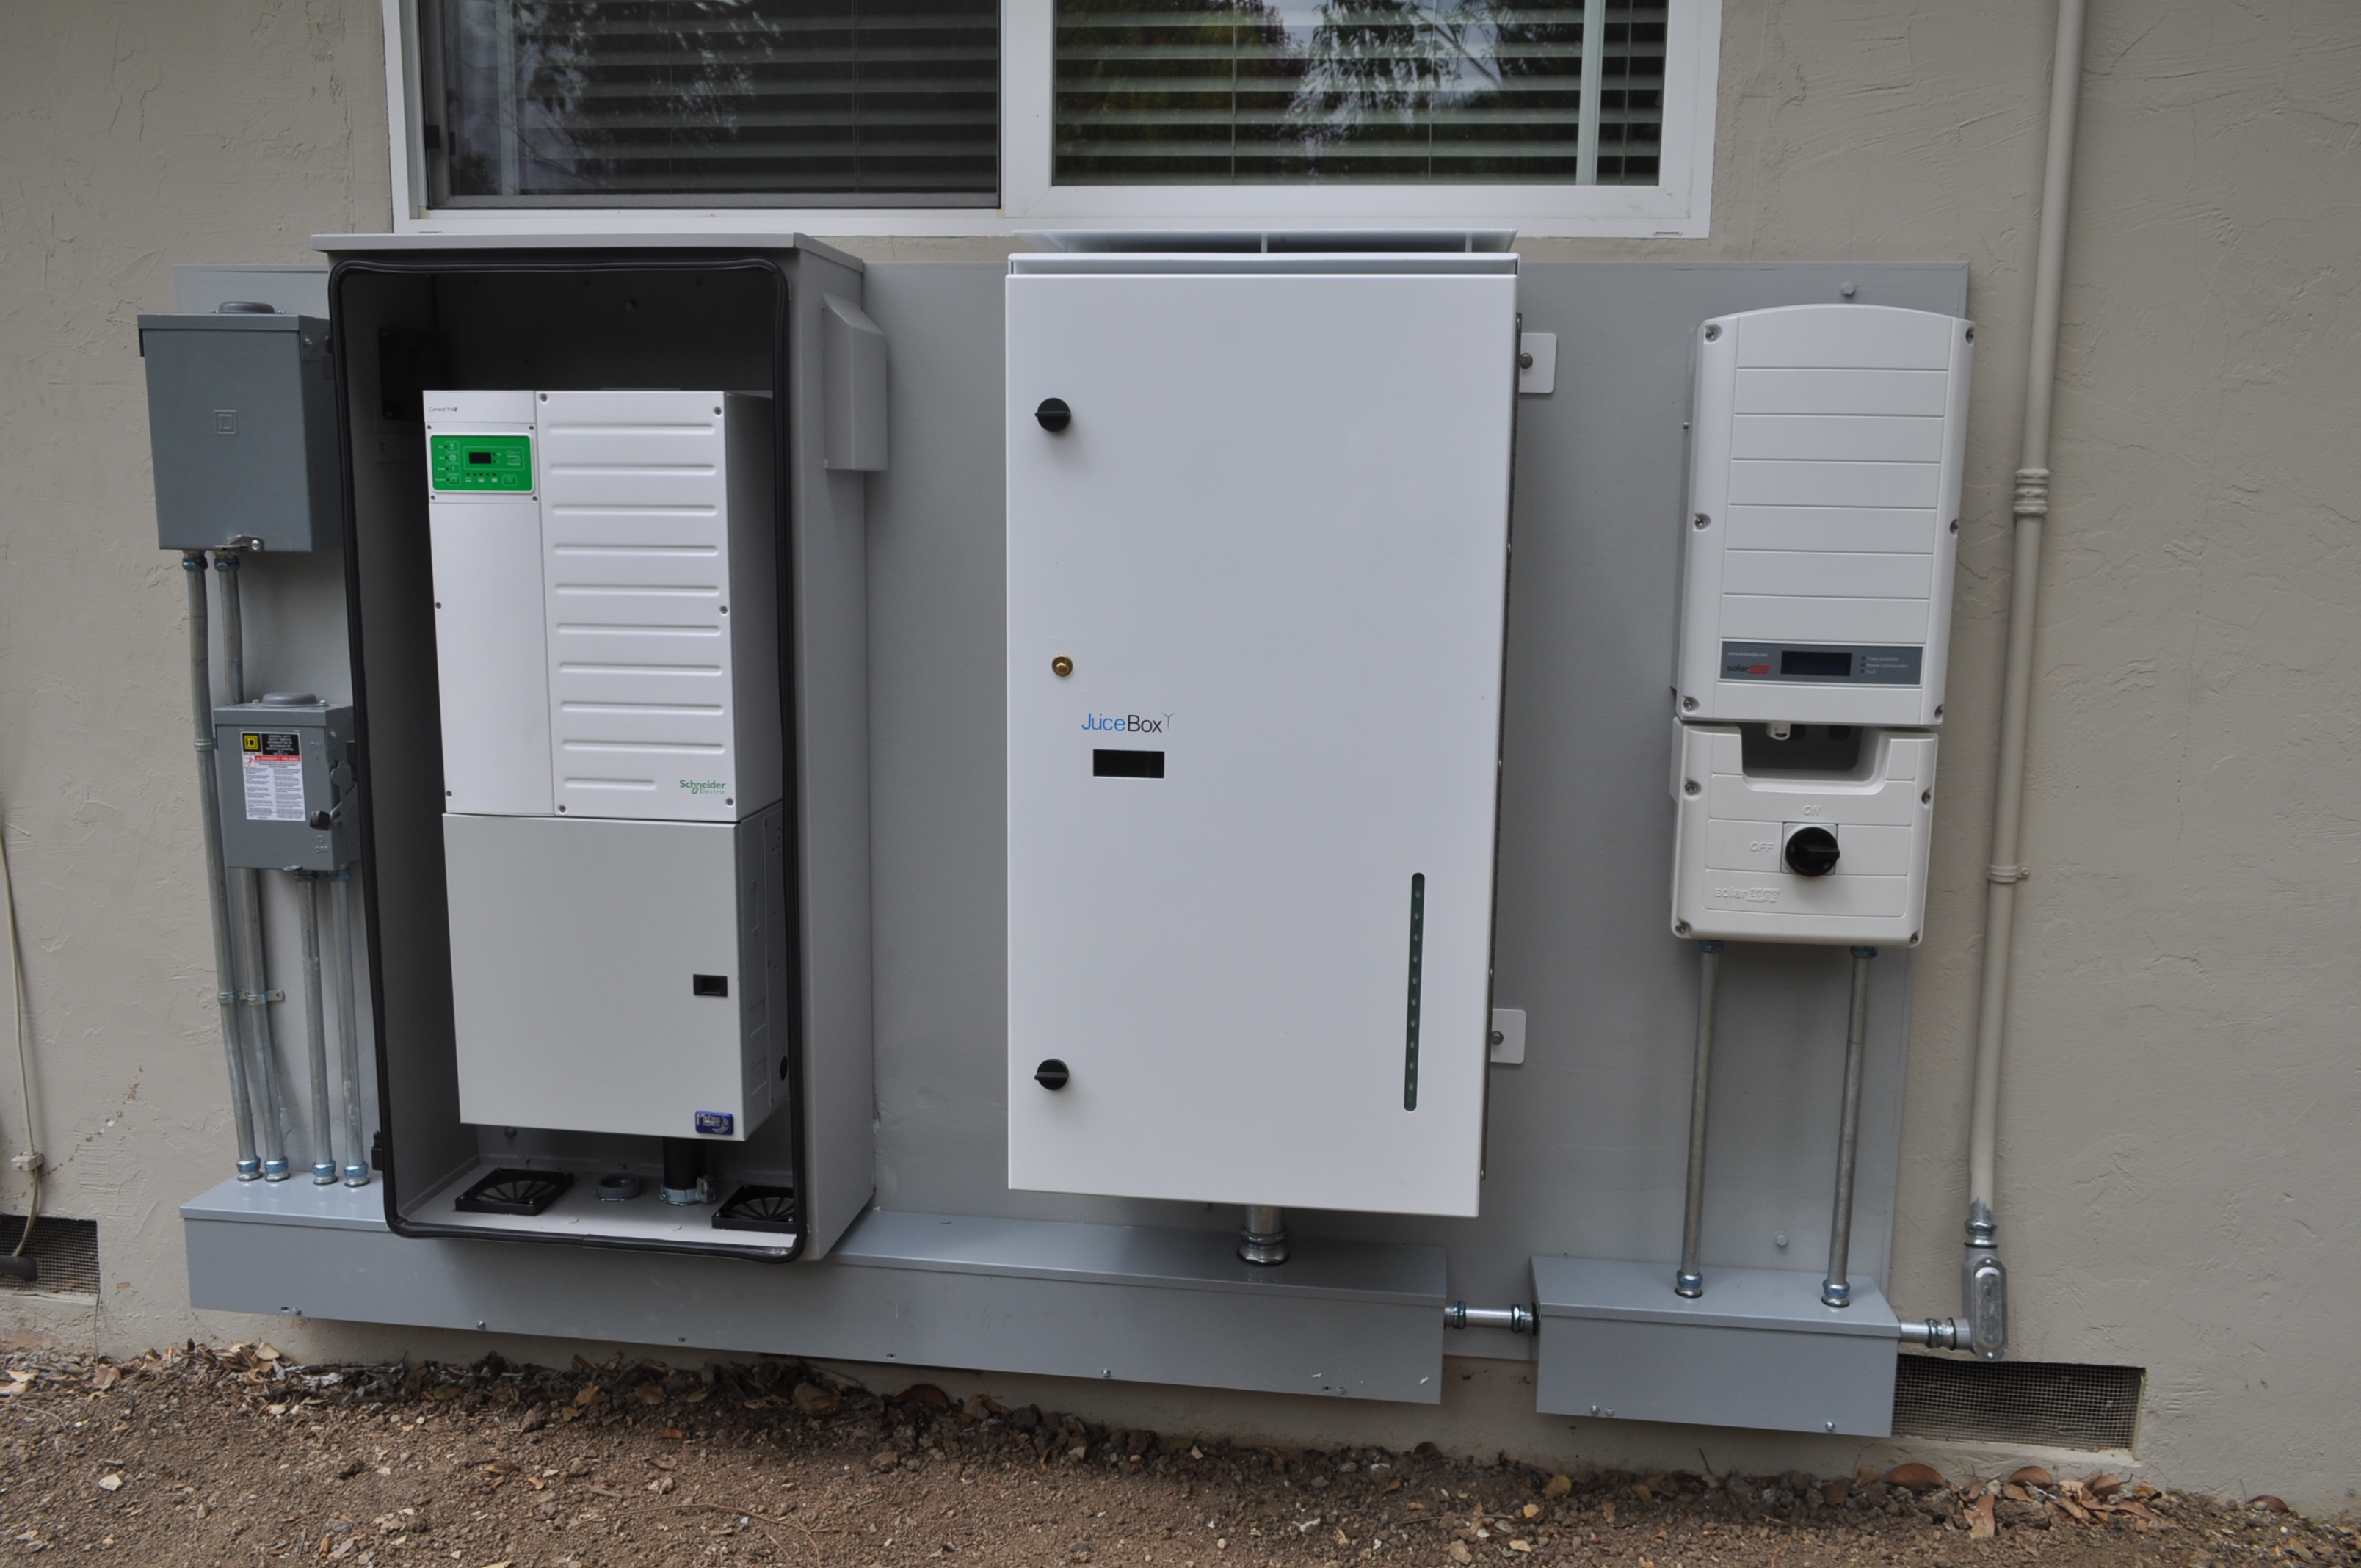 juicebox-energy-installs-residential-solar-energy-storage-system